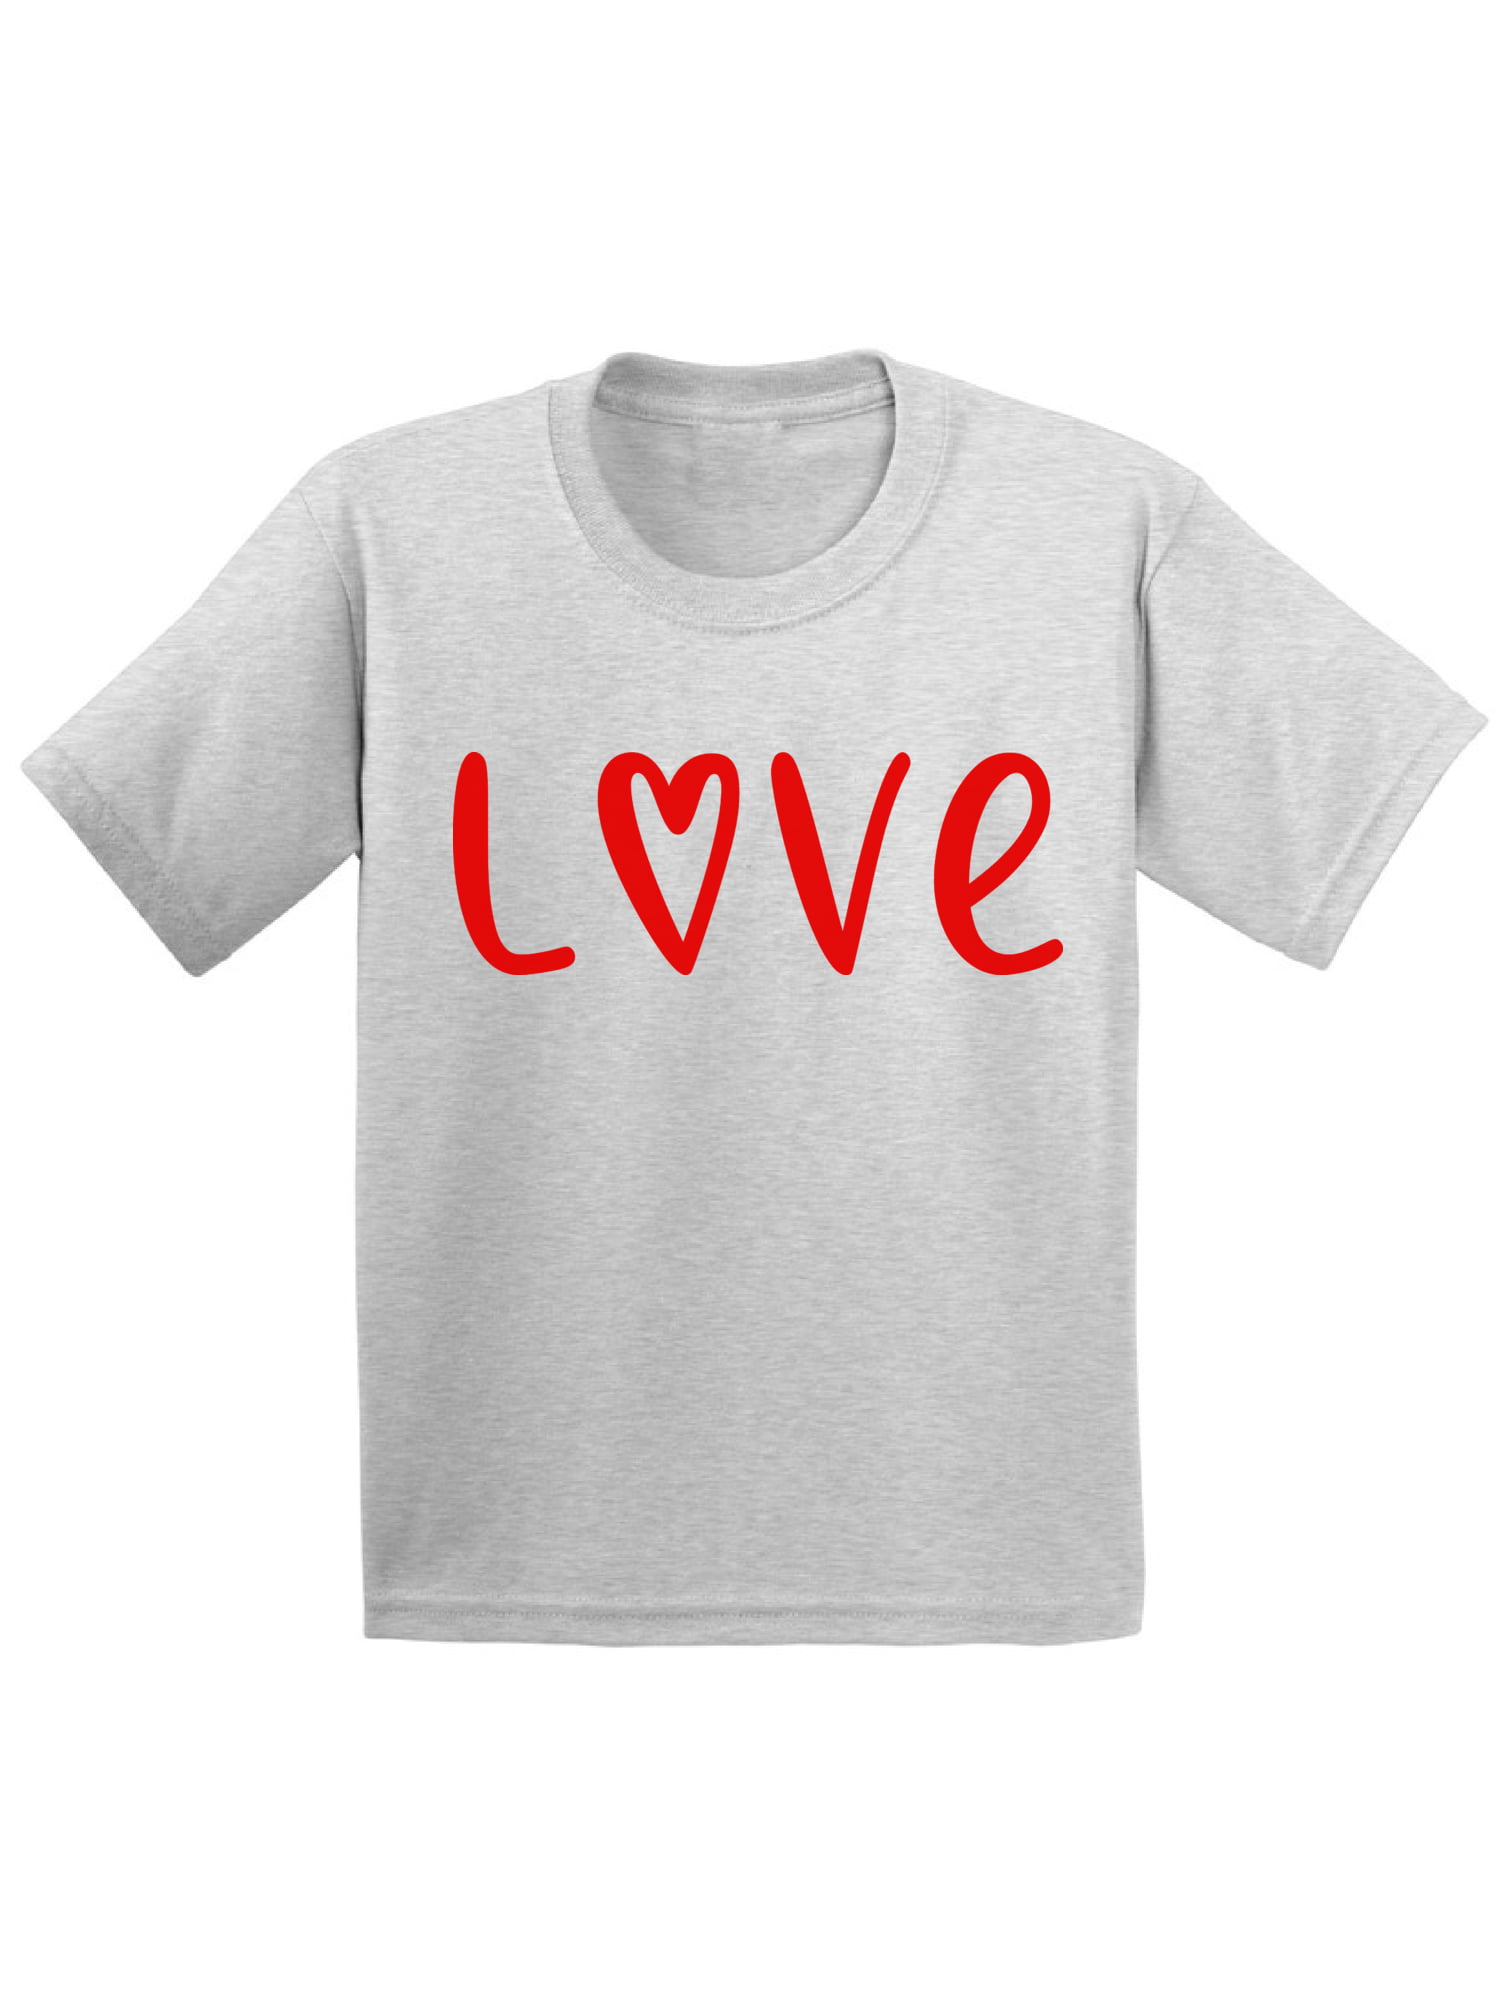 Love Valentines Shirt,Valentine   Shirt Heart Shirt,Love Shirt,Unisex Shirt,Toddlers Shirt,Youth Shirt